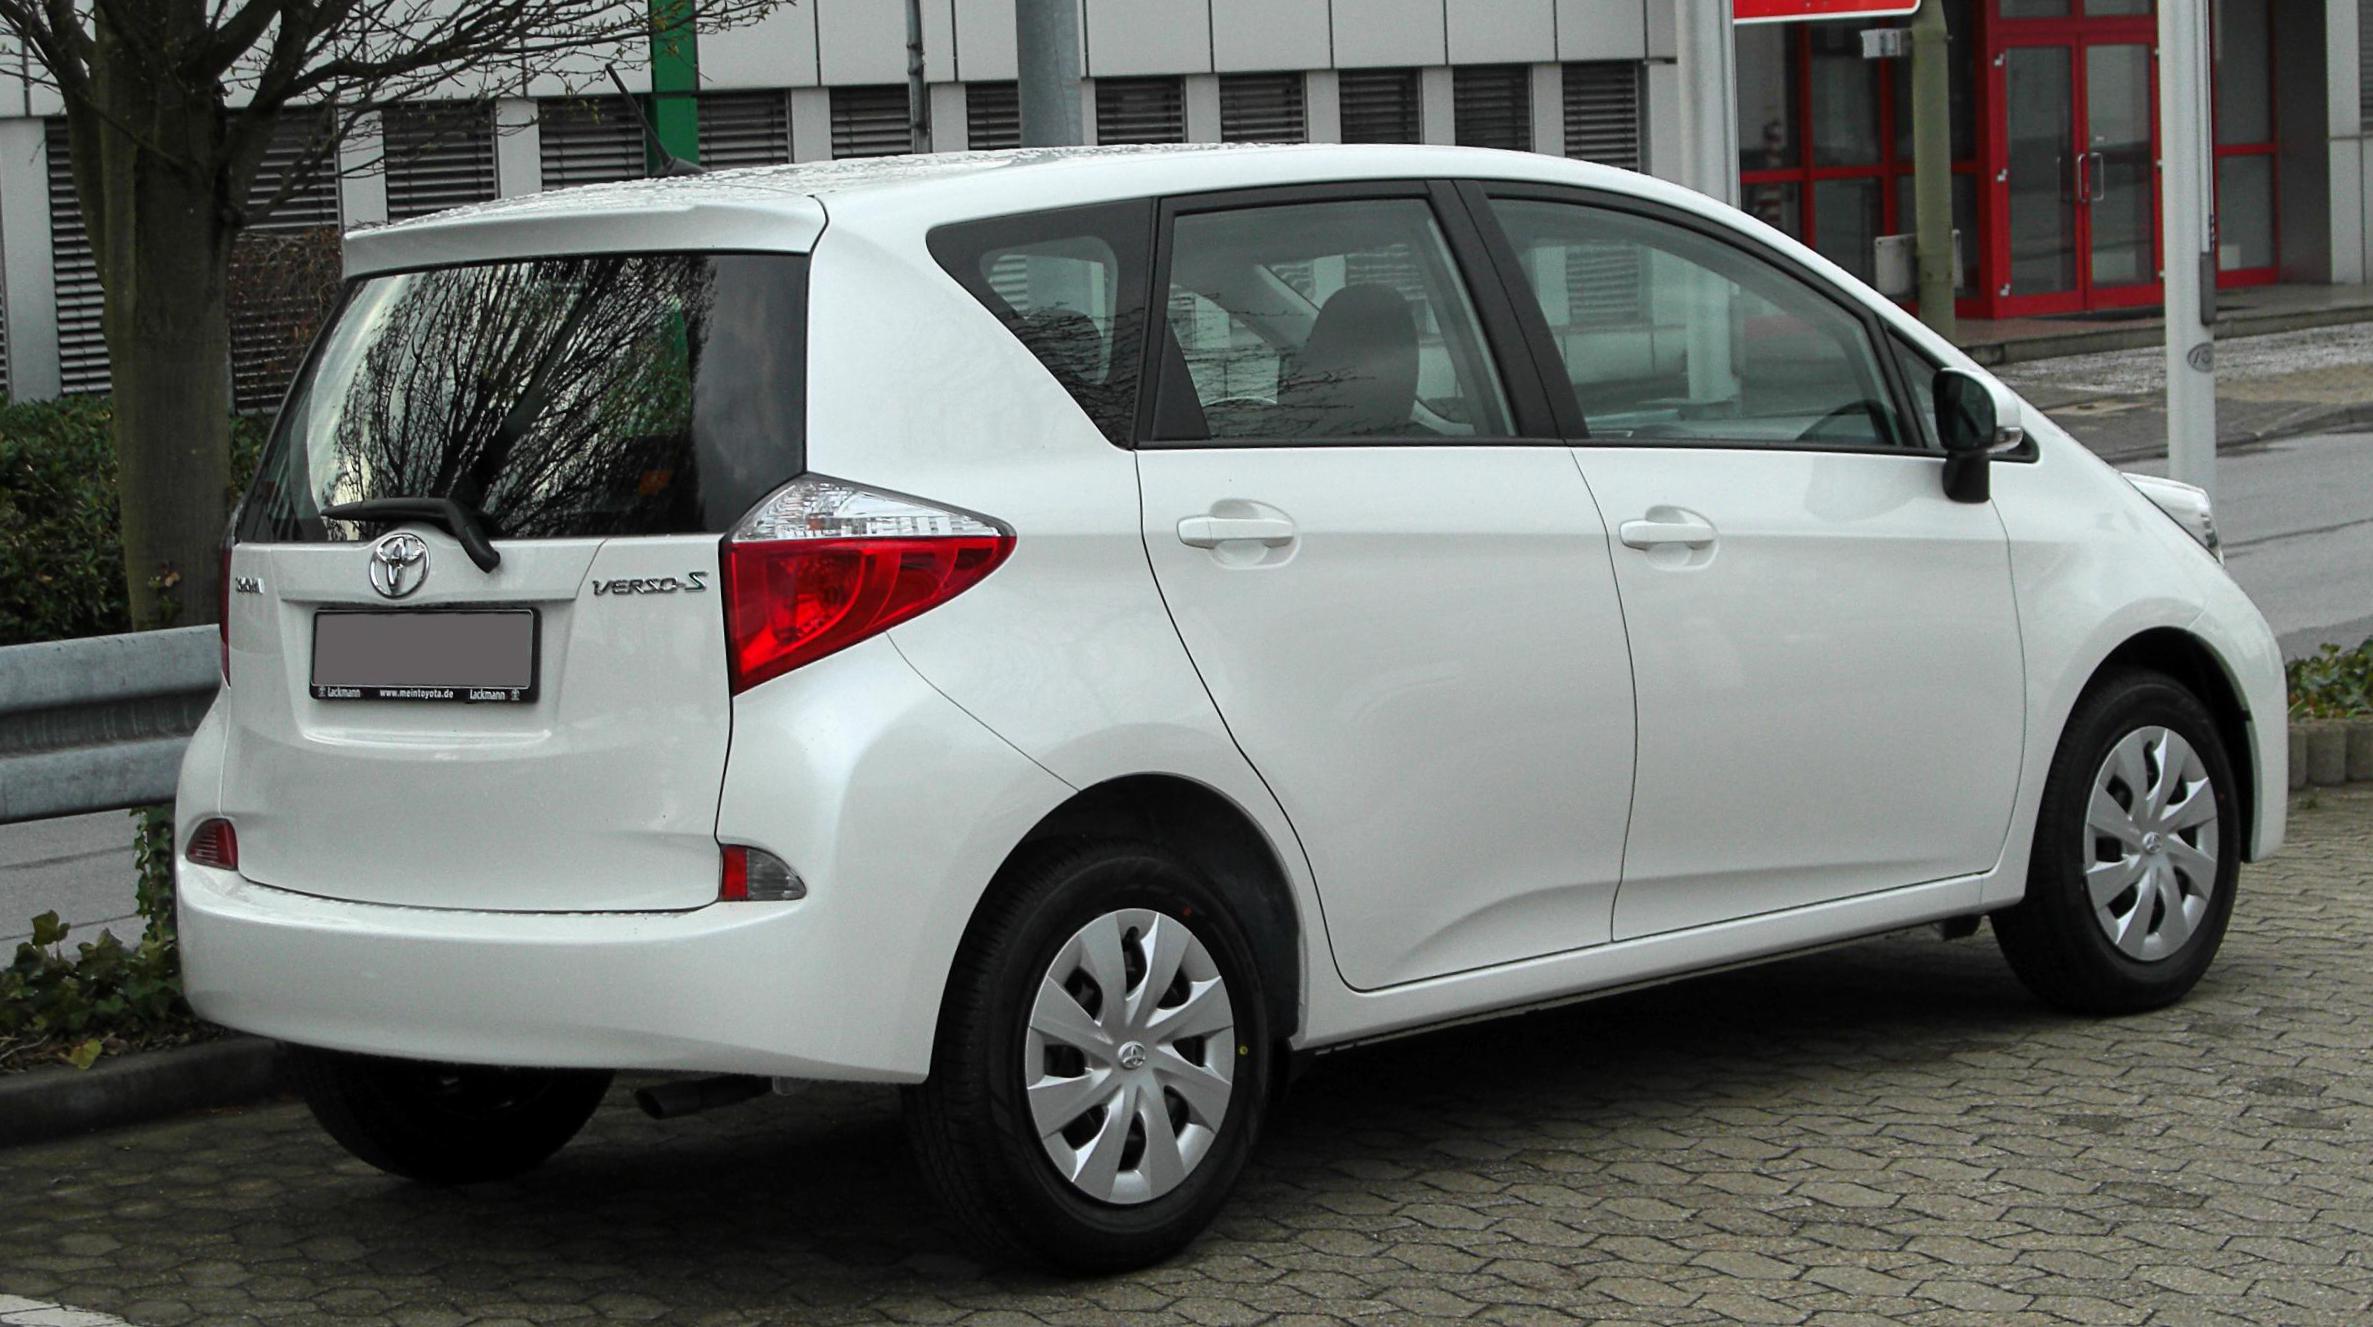 Toyota Verso-S concept 2015